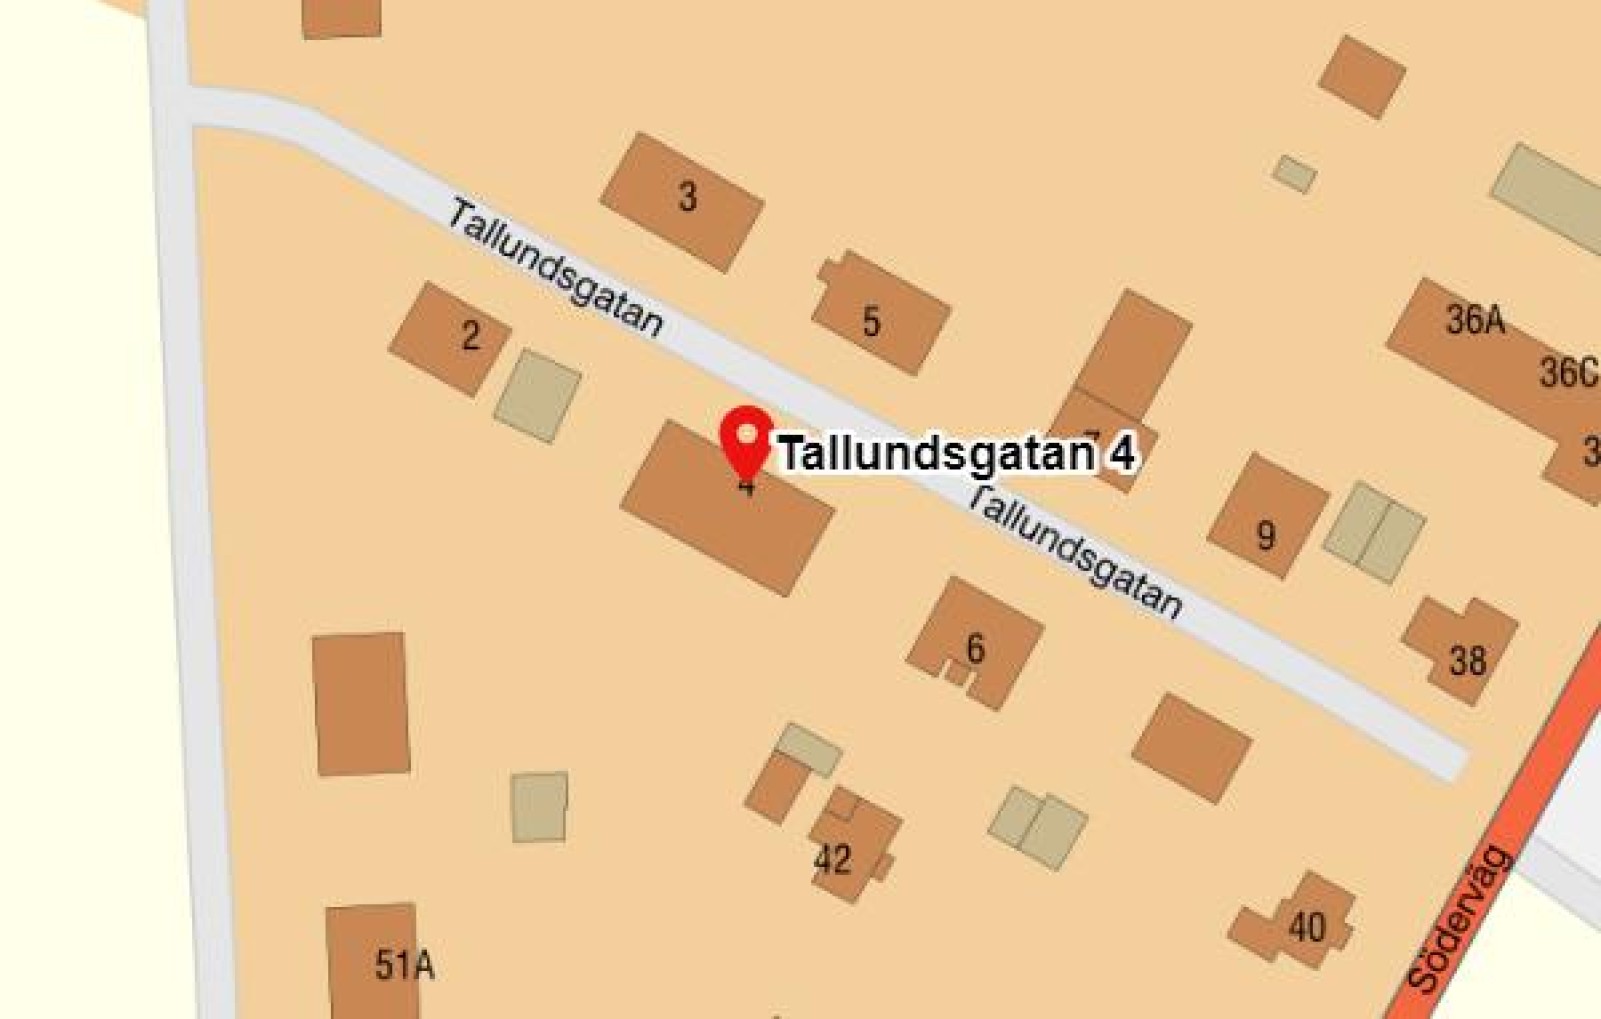  Tallundsgatan 4